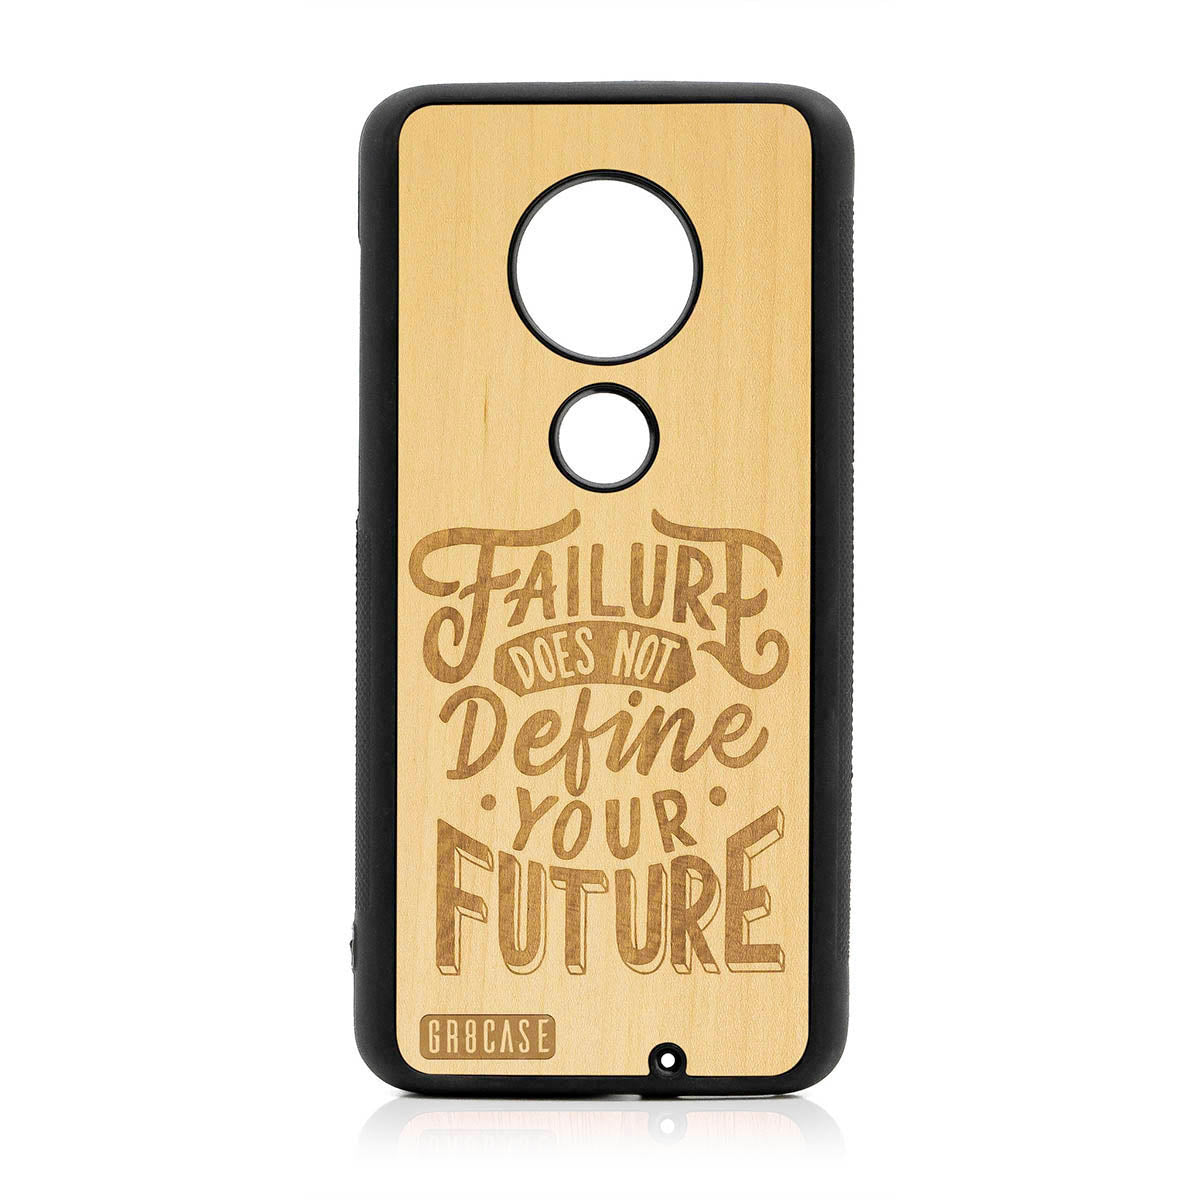 Failure Does Not Define You Future Design Wood Case For Moto G7 Plus by GR8CASE